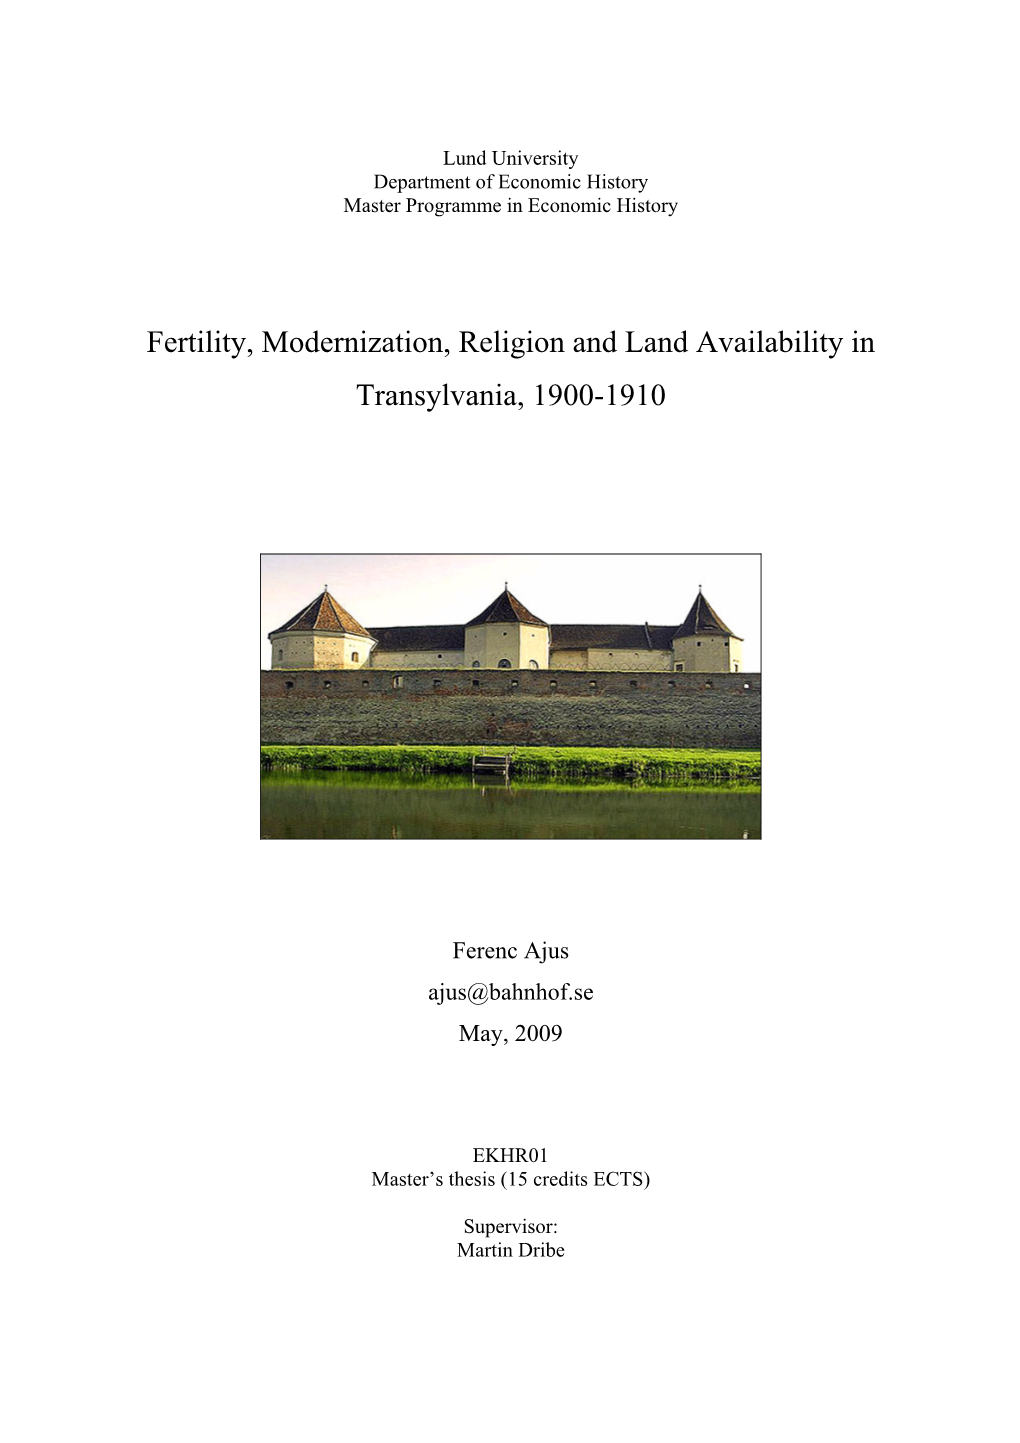 Fertility, Modernization, Religion and Land Availability in Transylvania, 1900-1910